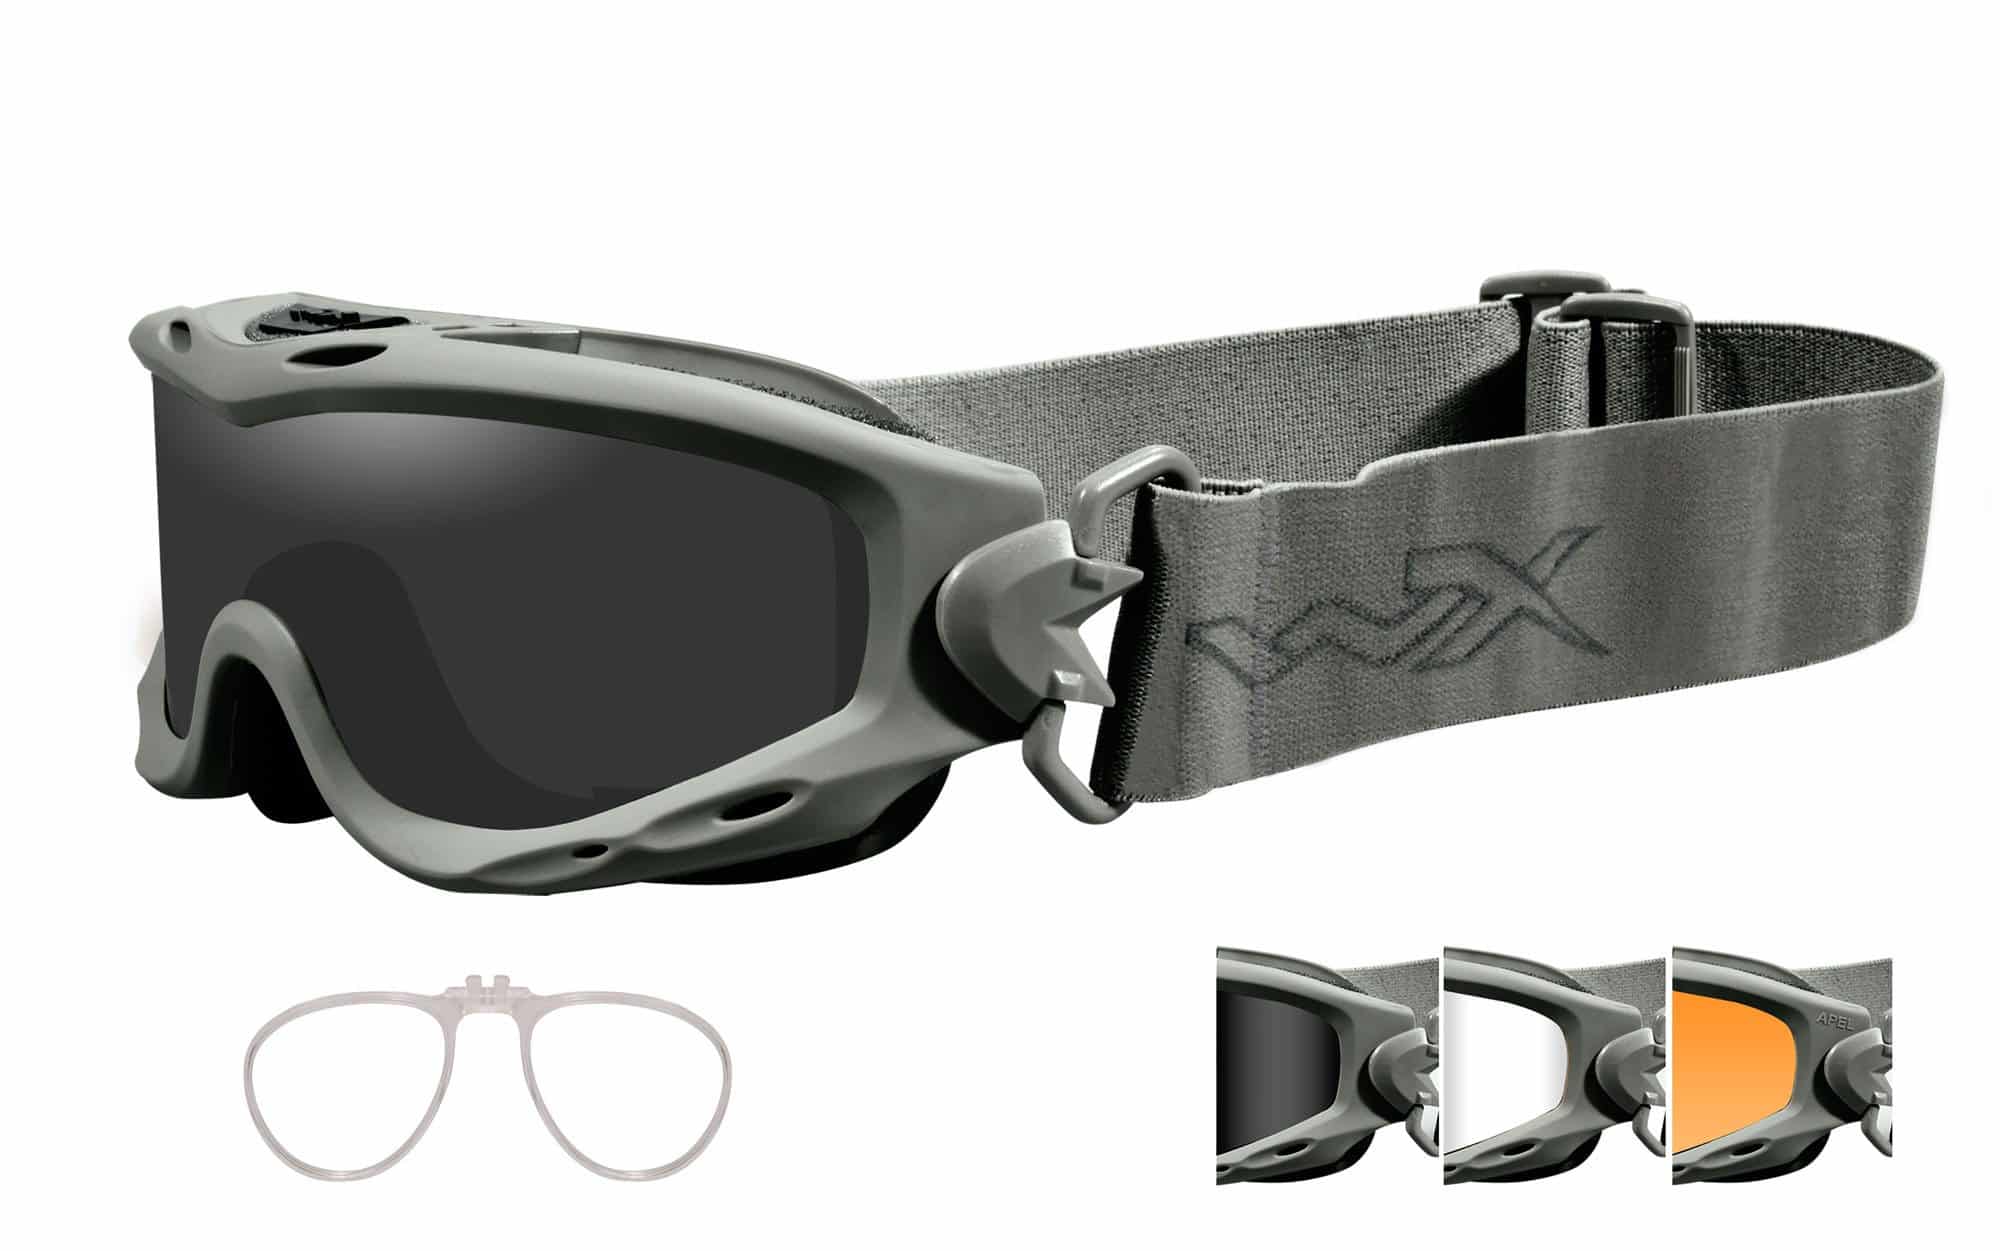 WileyX Spear | Tactical Prescription Goggles | 25% off Sale